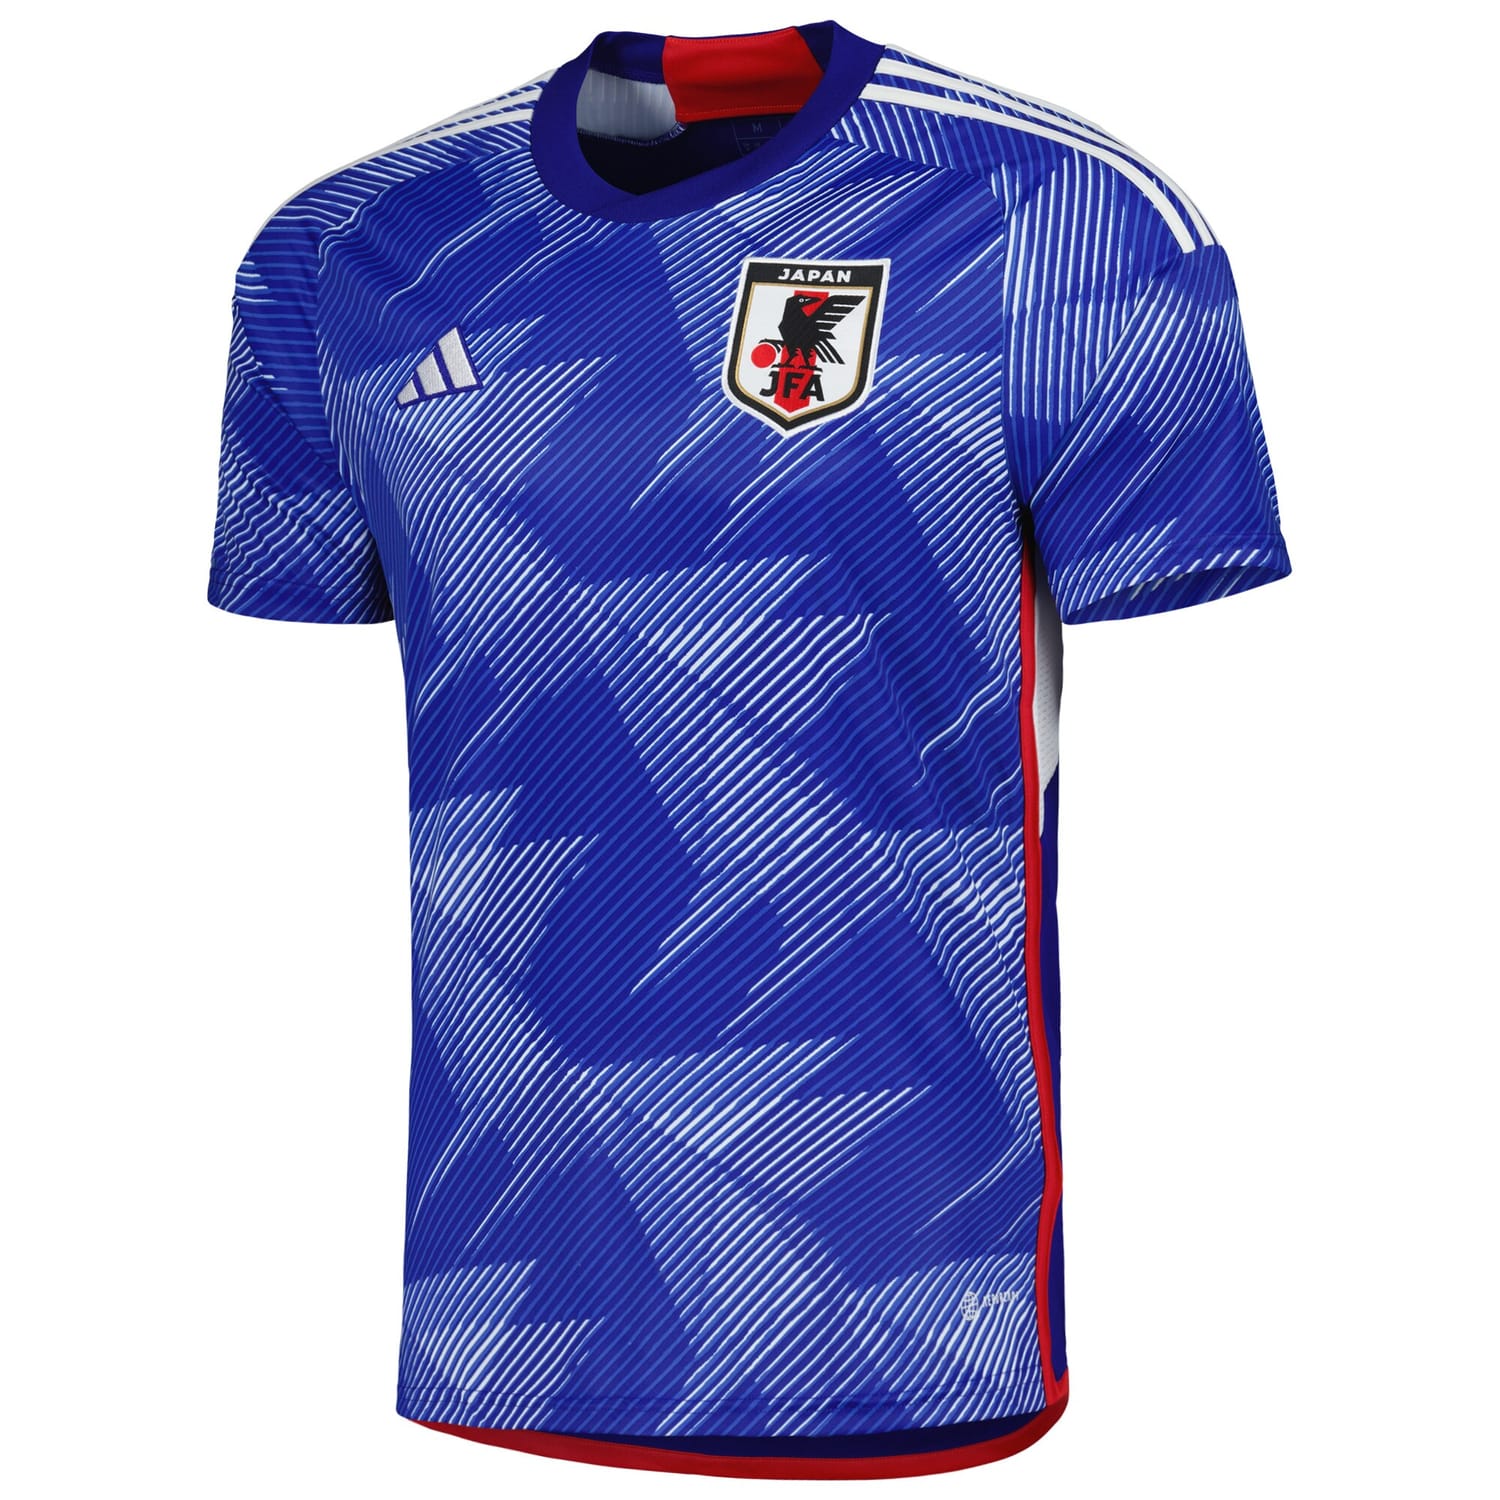 Japan National Team Home Jersey Shirt Blue 2022-23 for Men